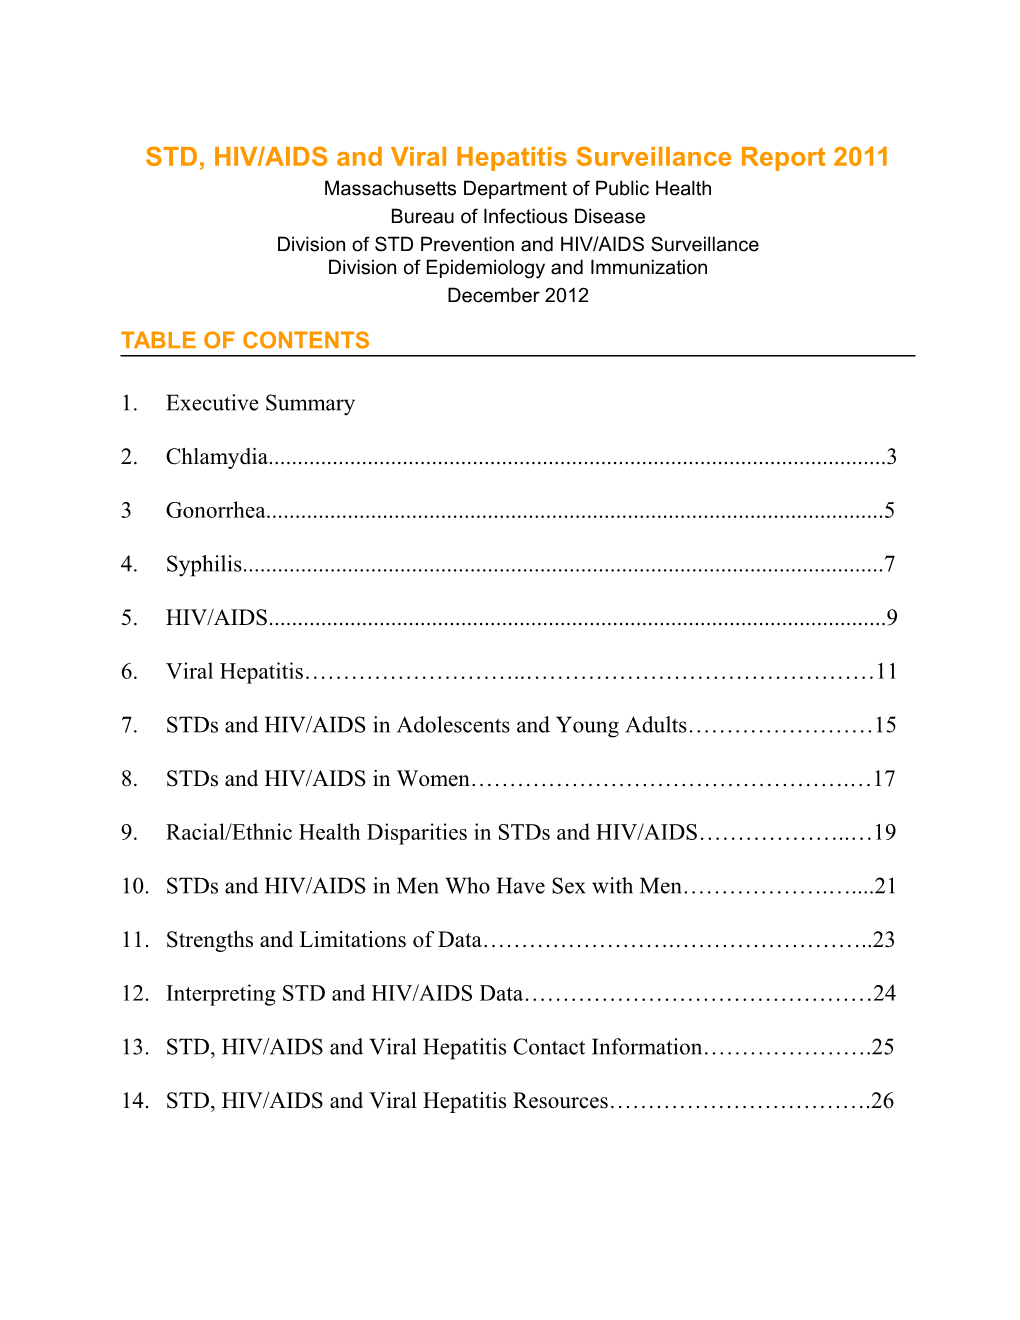 STD, HIV/AIDS and Viral Hepatitis Surveillance Report 2007